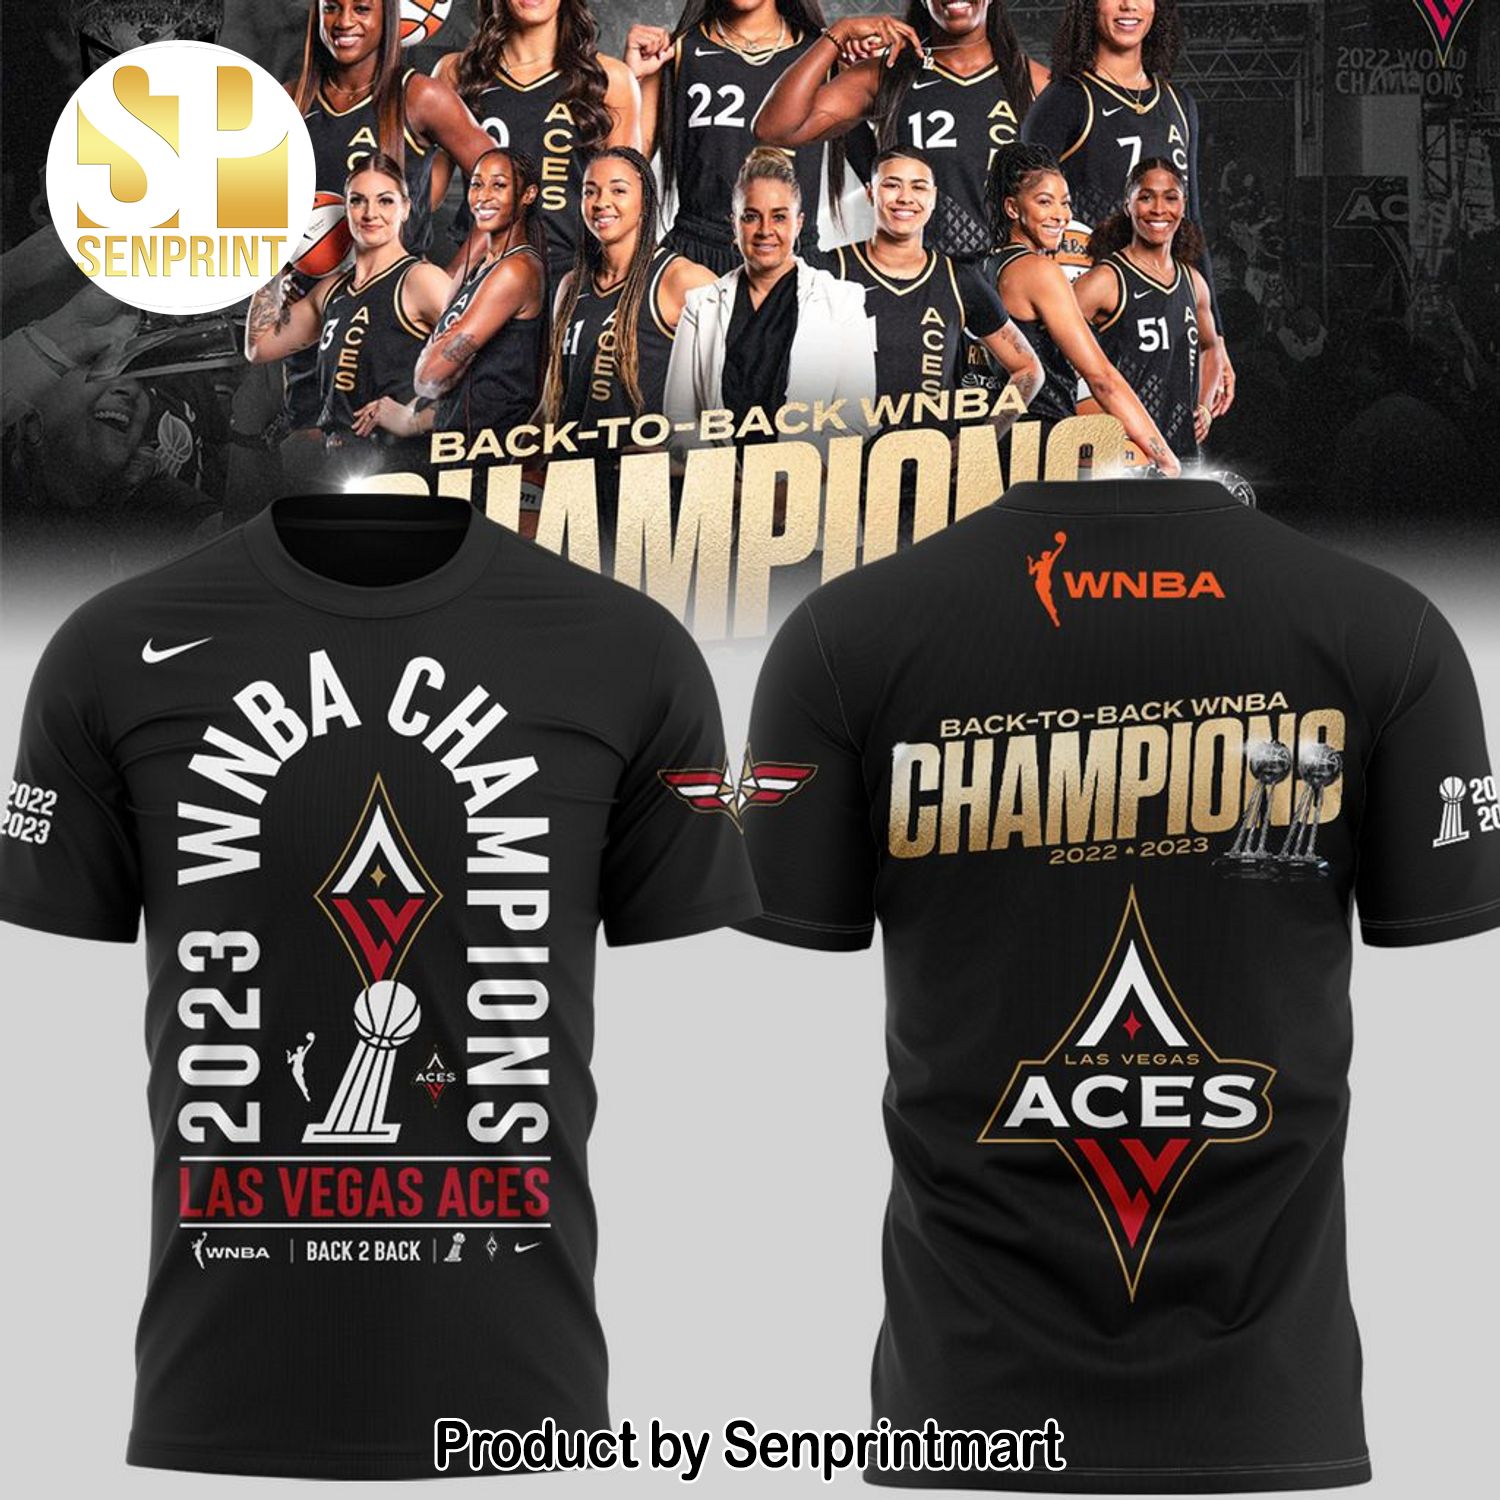 WNBA Back To Back Champions 2022-2023 Las Vegas Aces Full Printing 3D Shirt